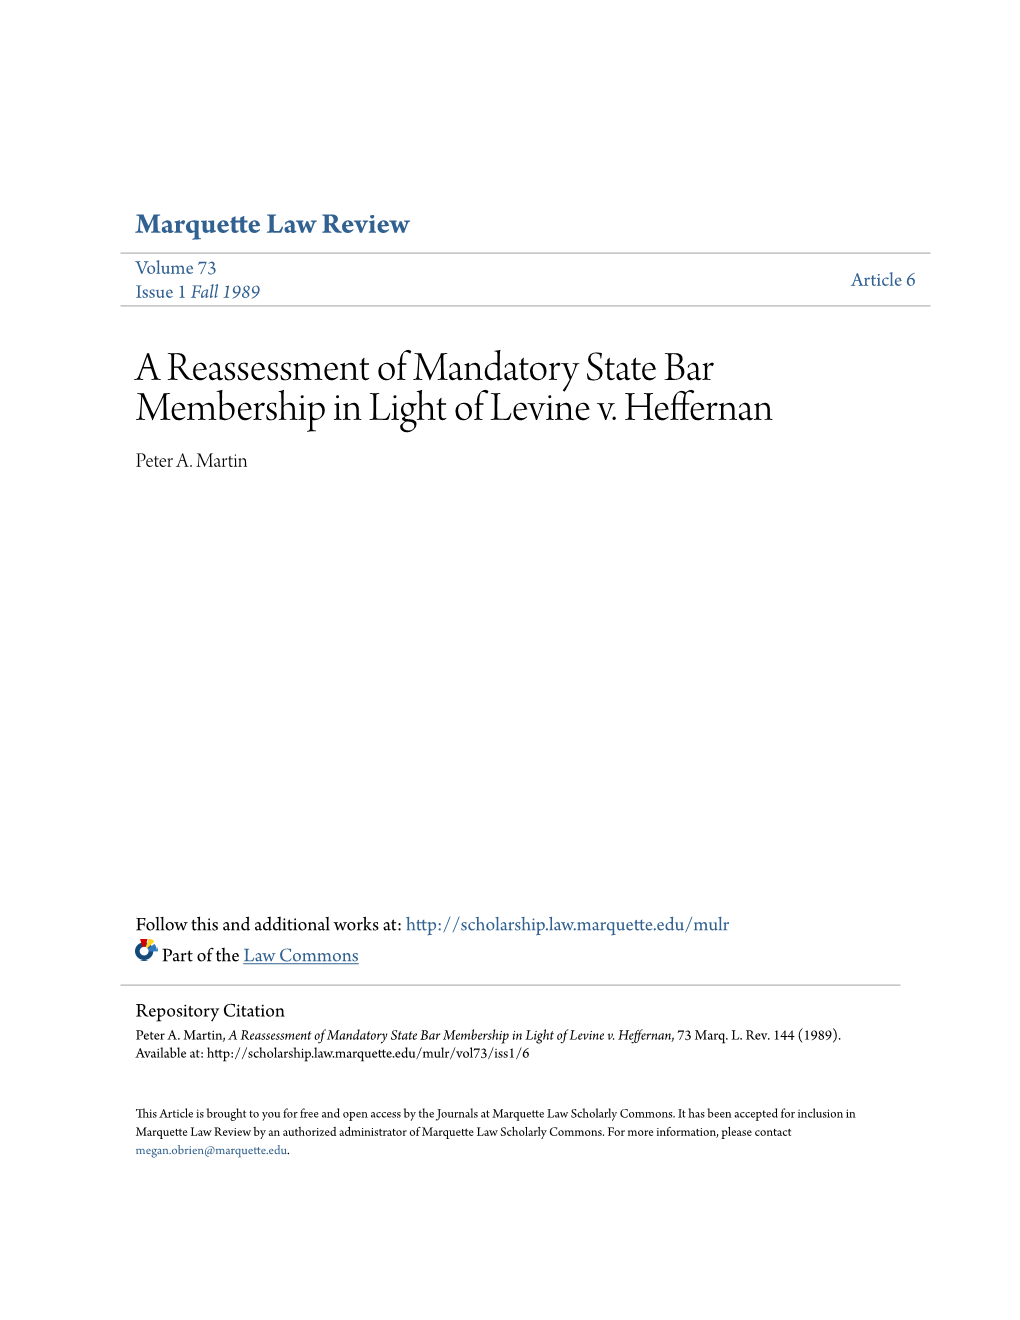 A Reassessment of Mandatory State Bar Membership in Light of Levine V. Heffernan Peter A